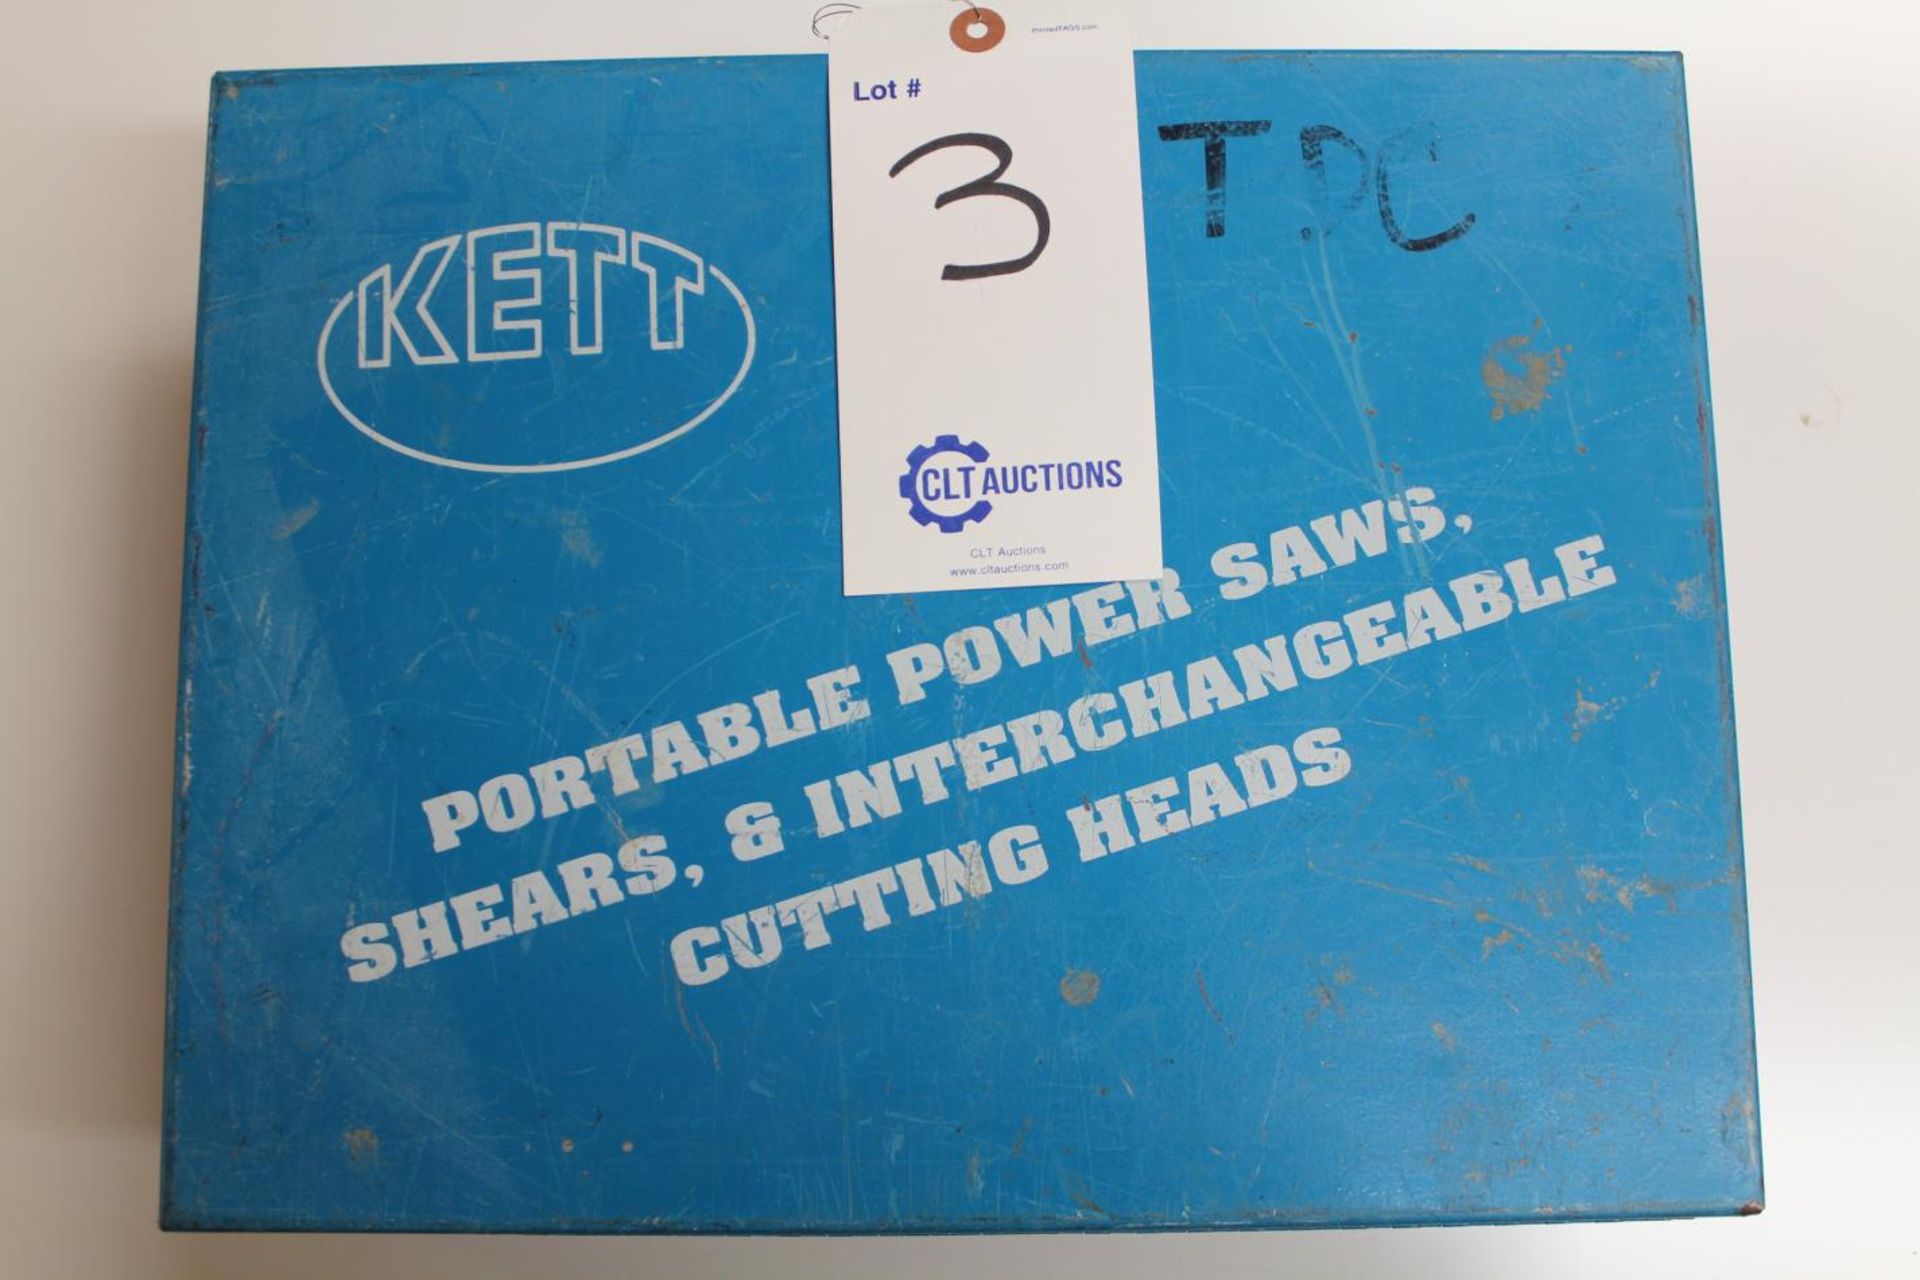 Kett Model K-414 Power Shear